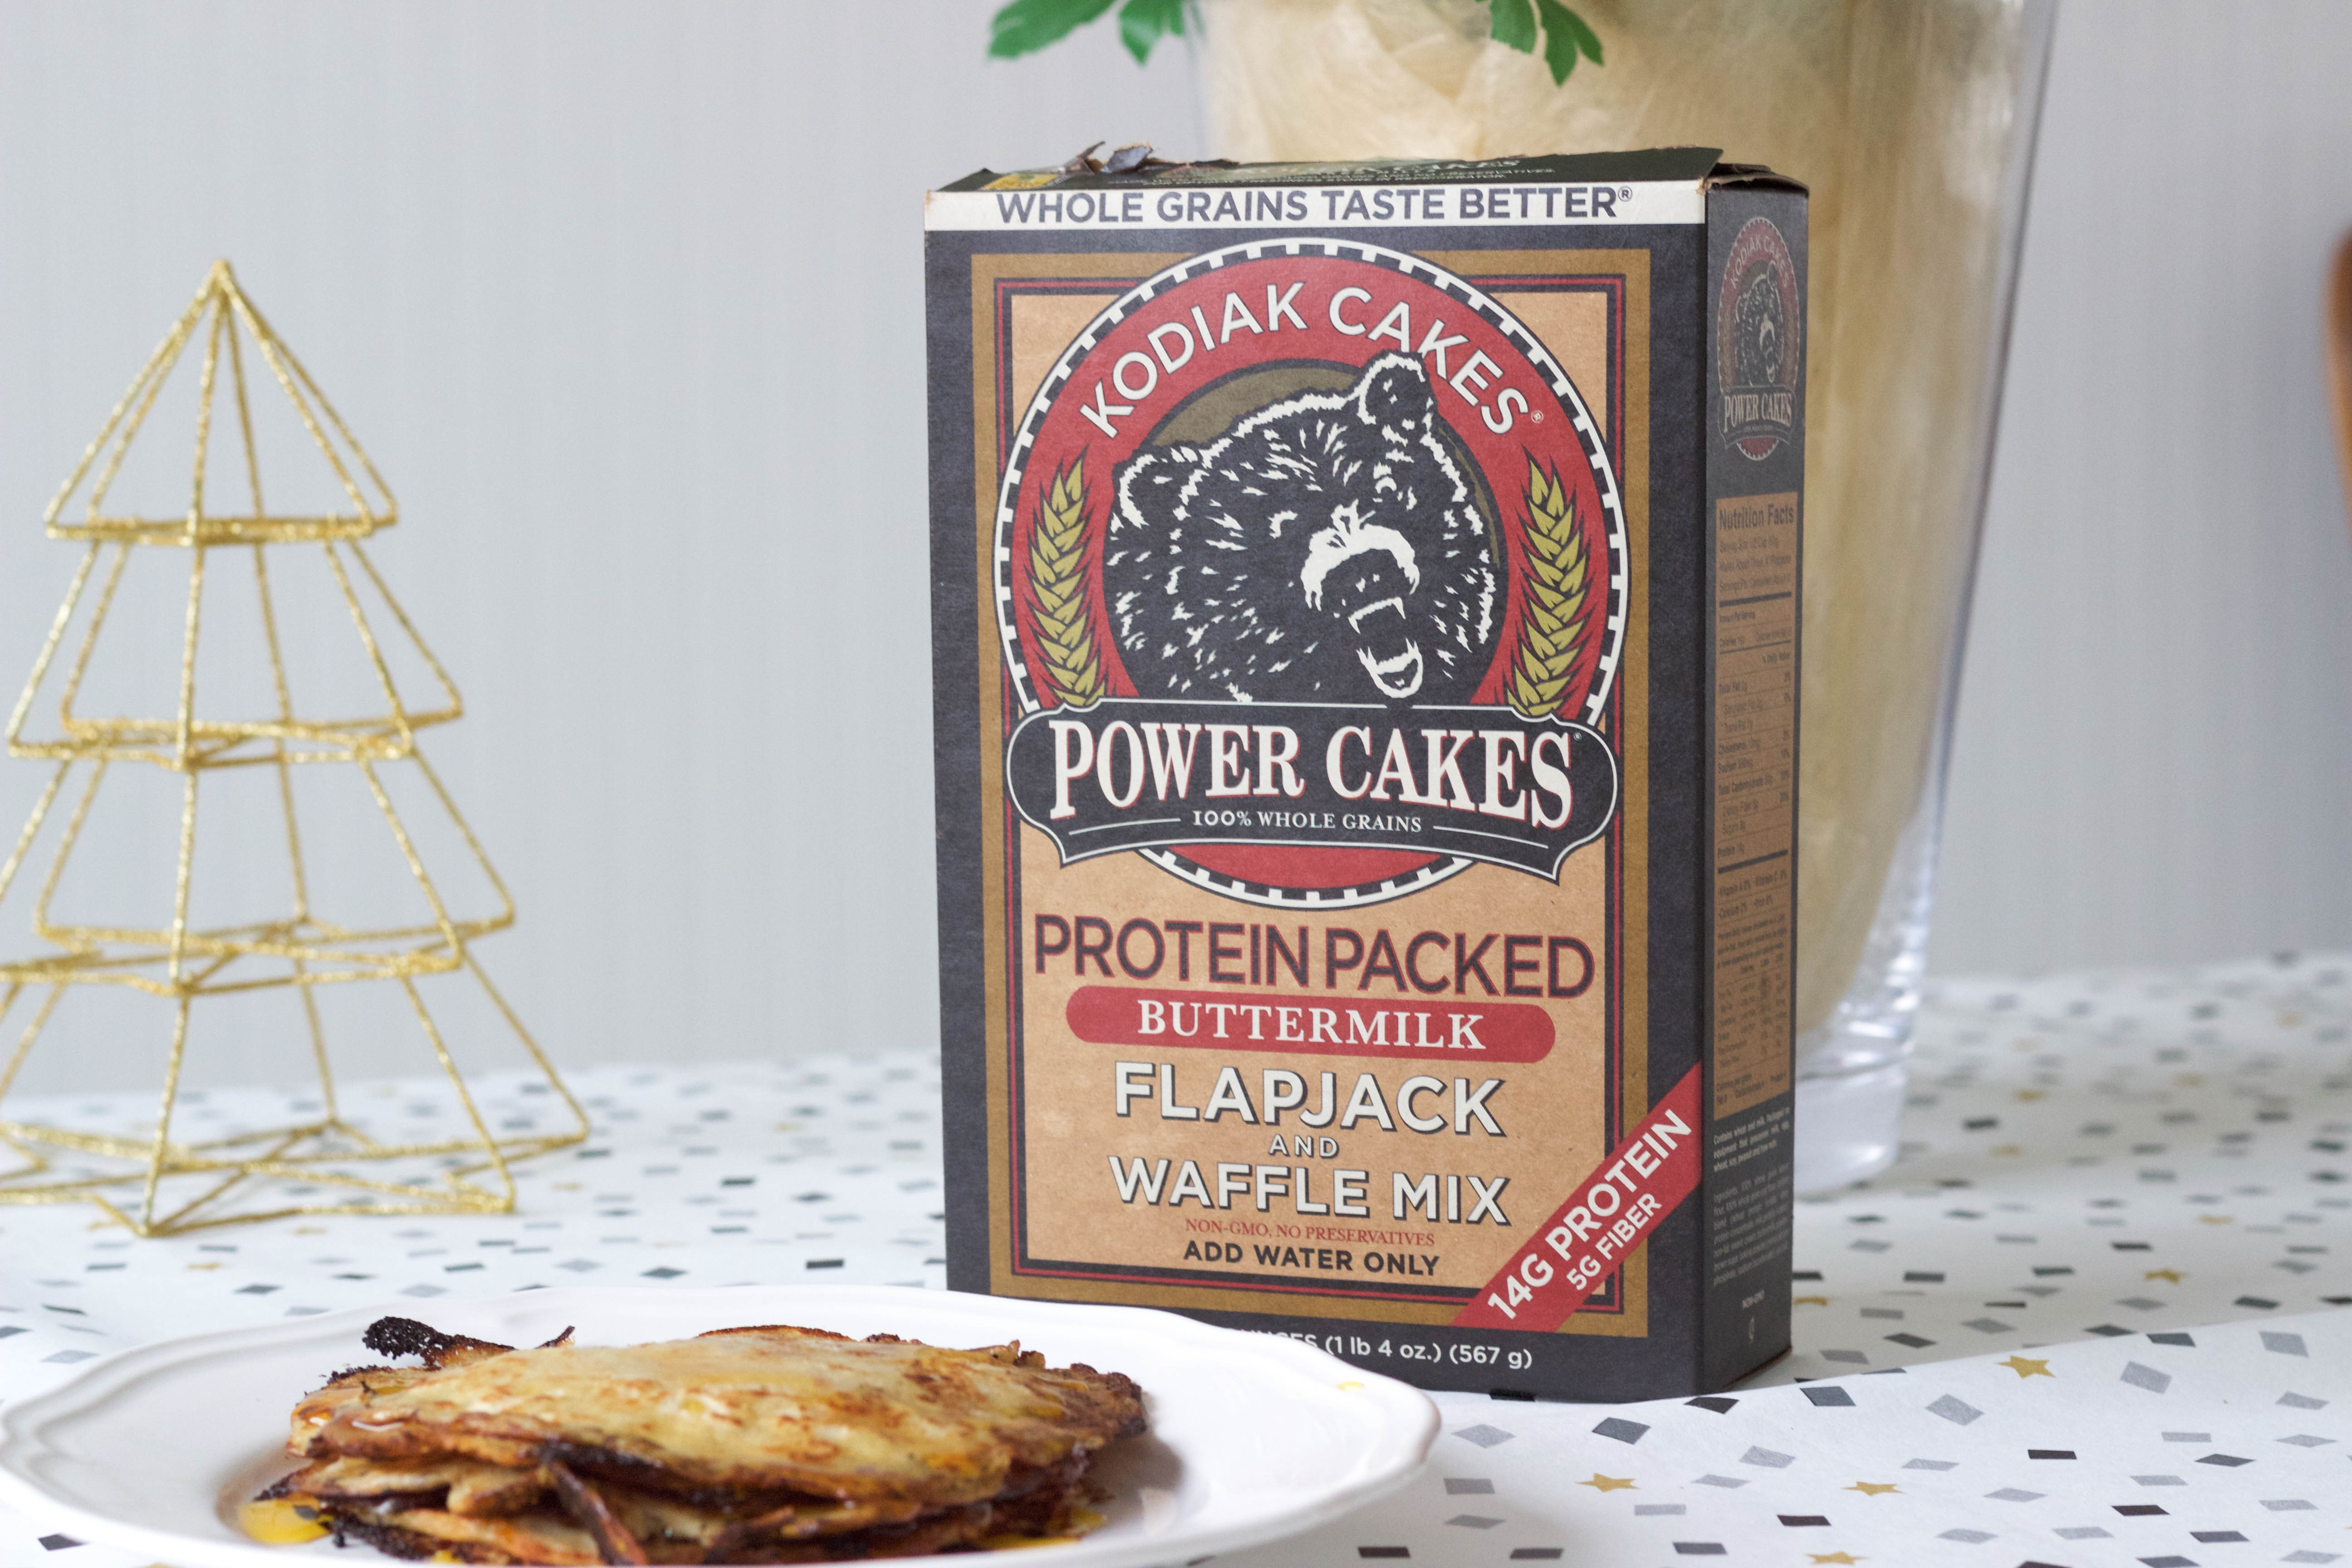 Kodiak power cakes flapjack and waffle mix review